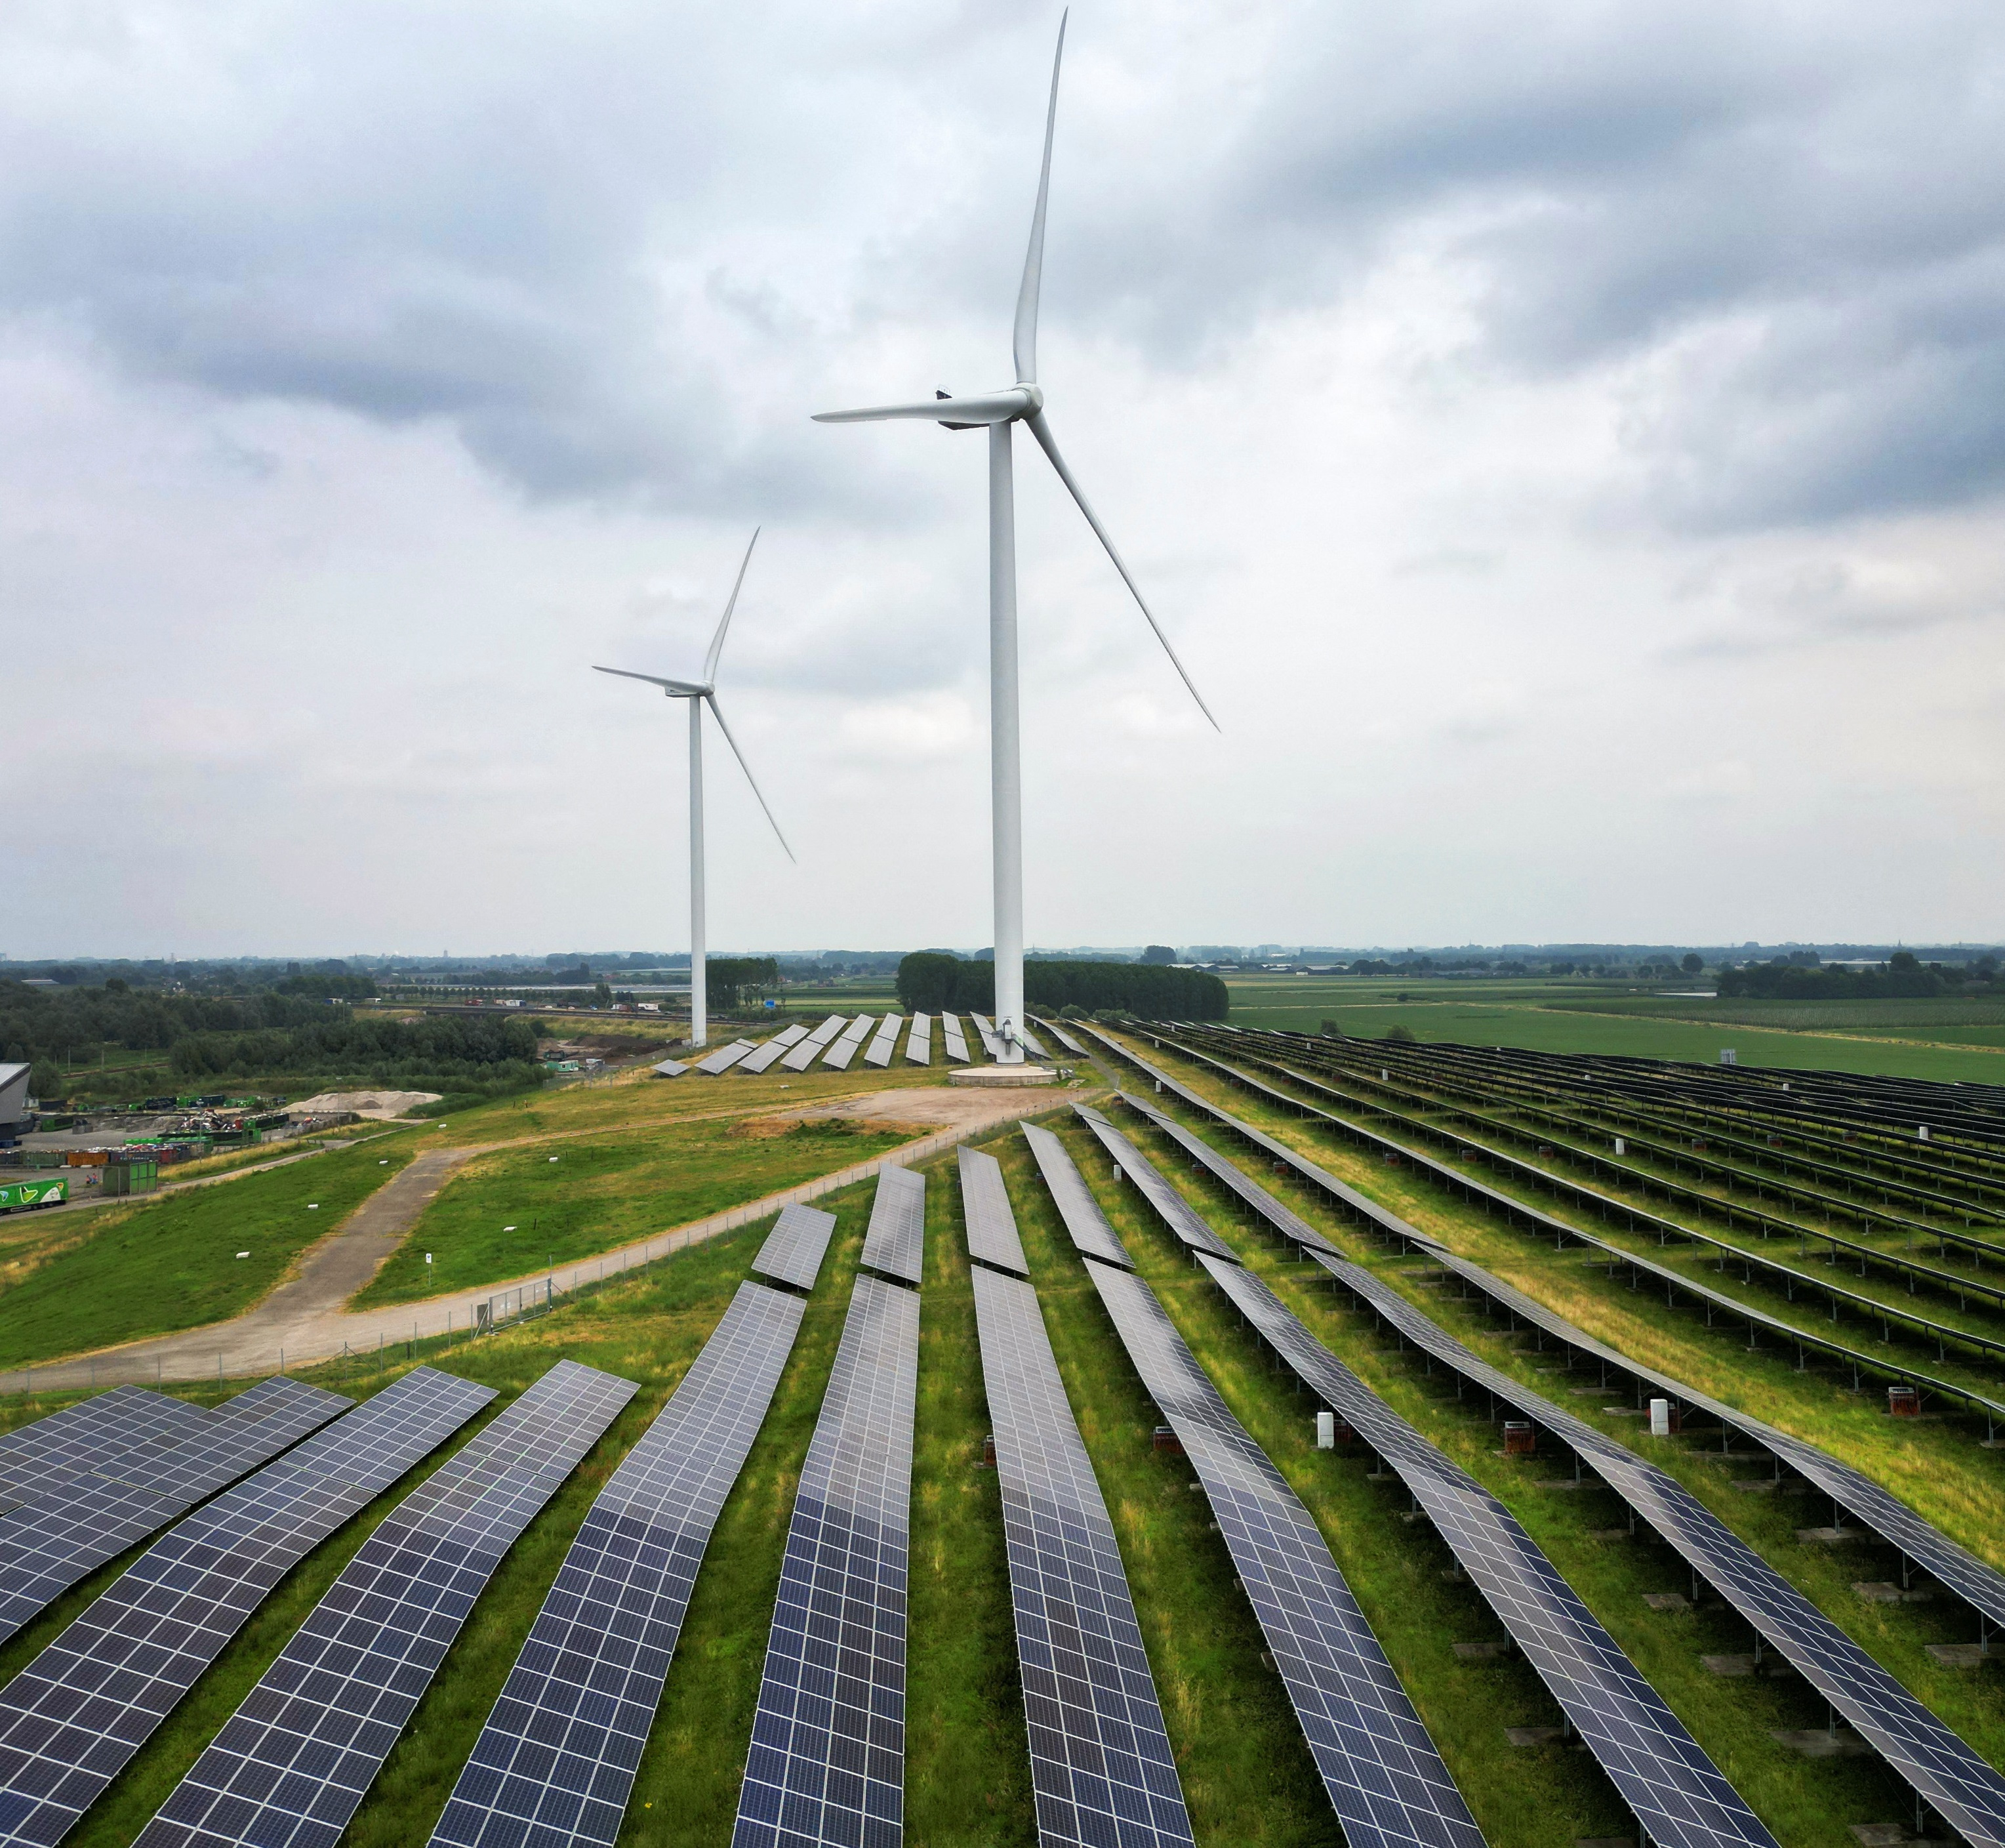 A solar panel park and wind turbines are seen in Geldermalsen, Netherlands.